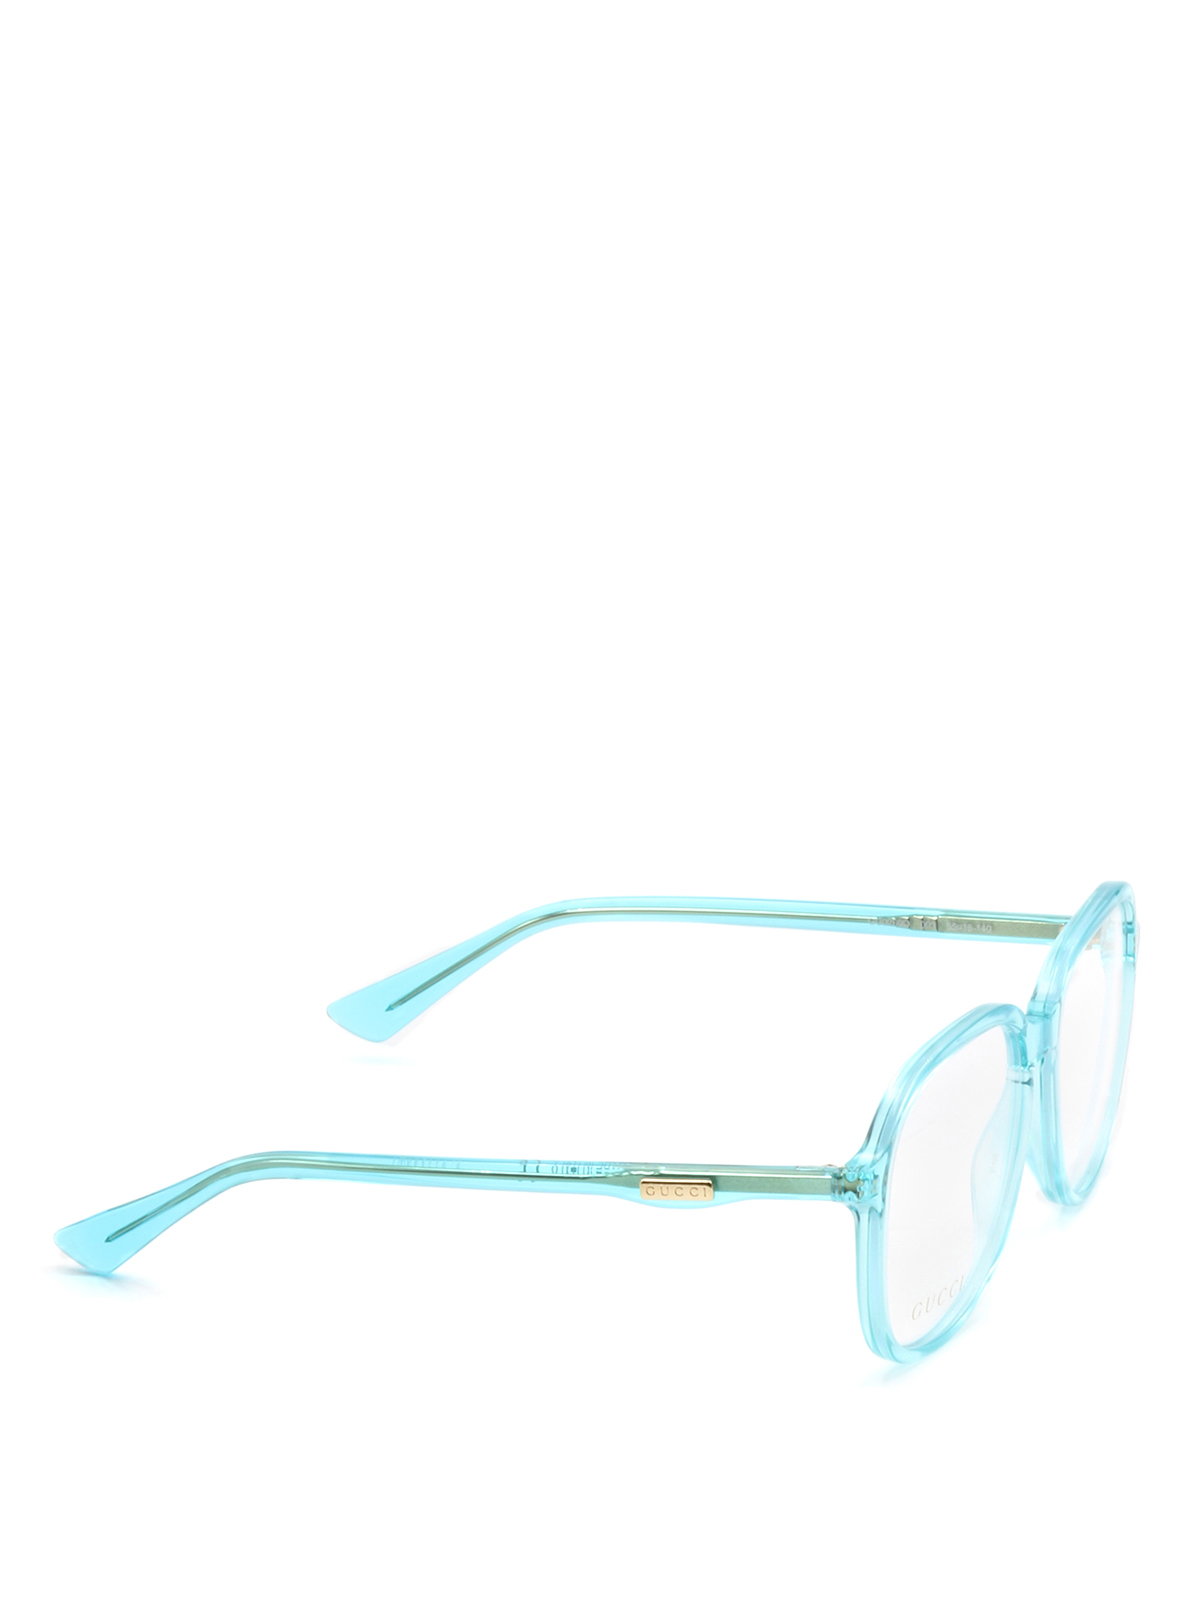 gucci glasses blue frame